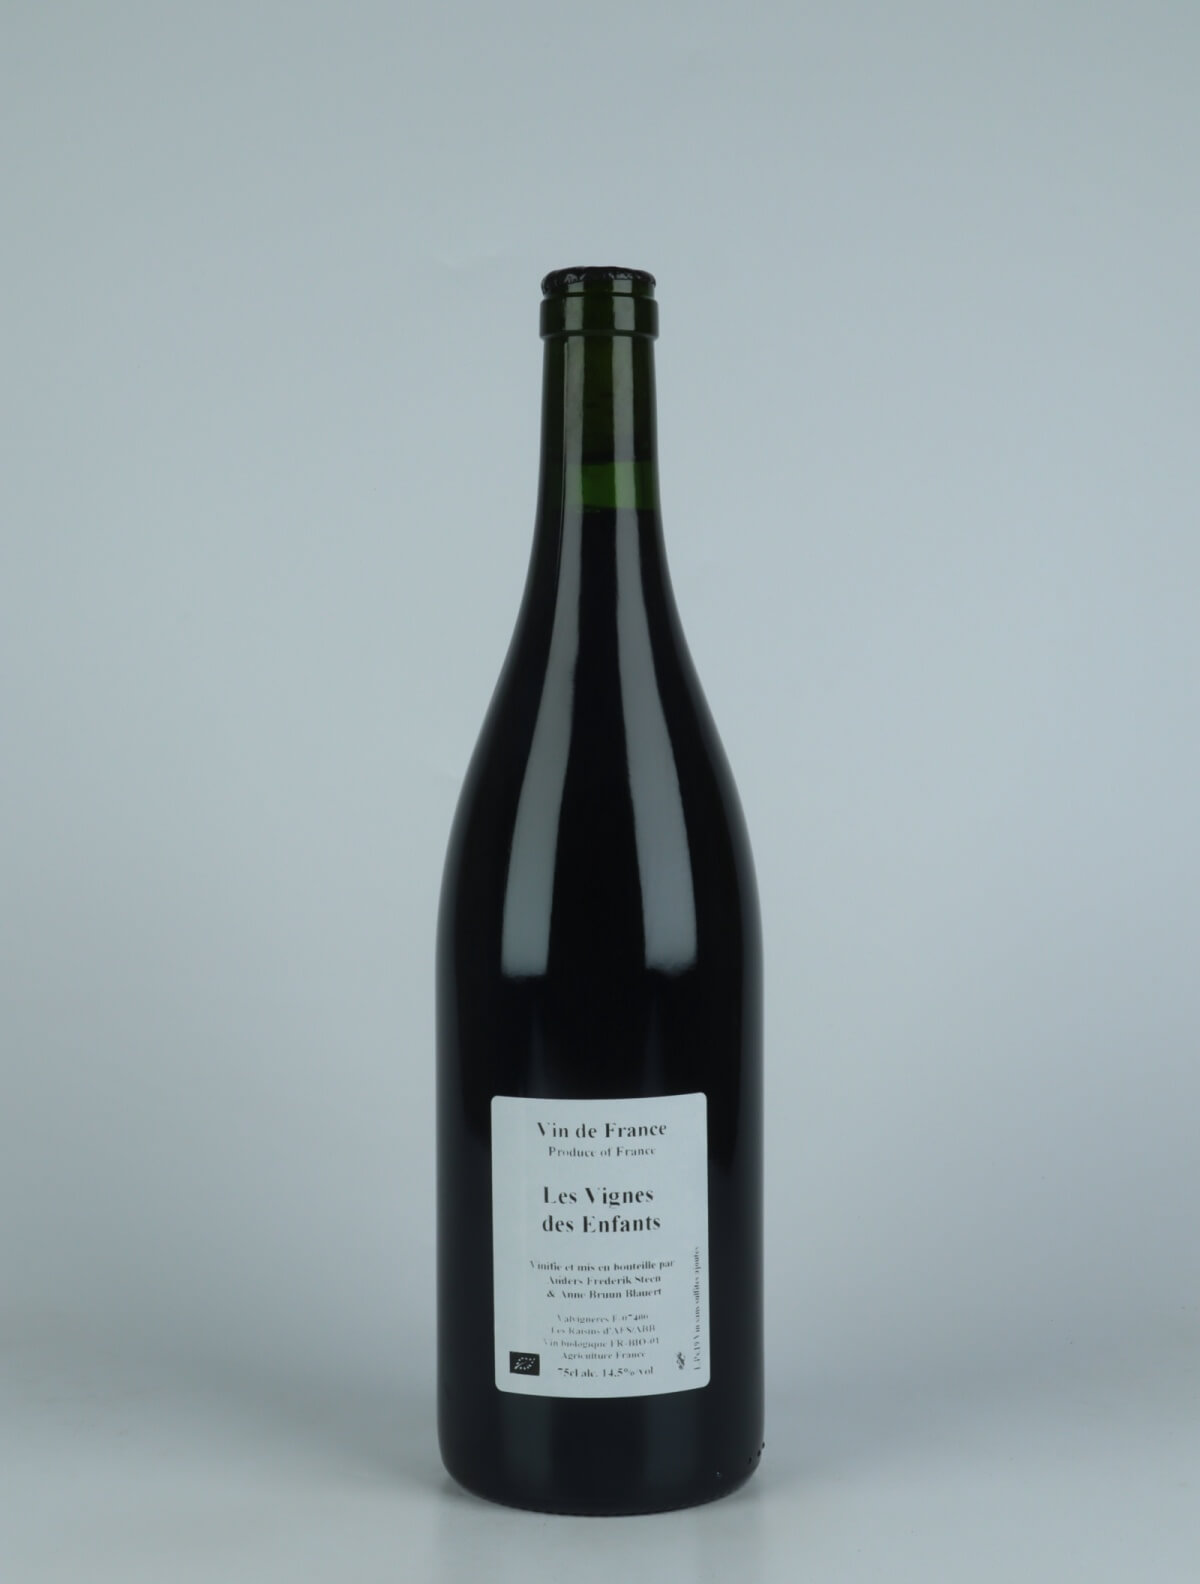 A bottle 2019 Les Vignes des Enfants Red wine from Anders Frederik Steen & Anne Bruun Blauert, Ardèche in France